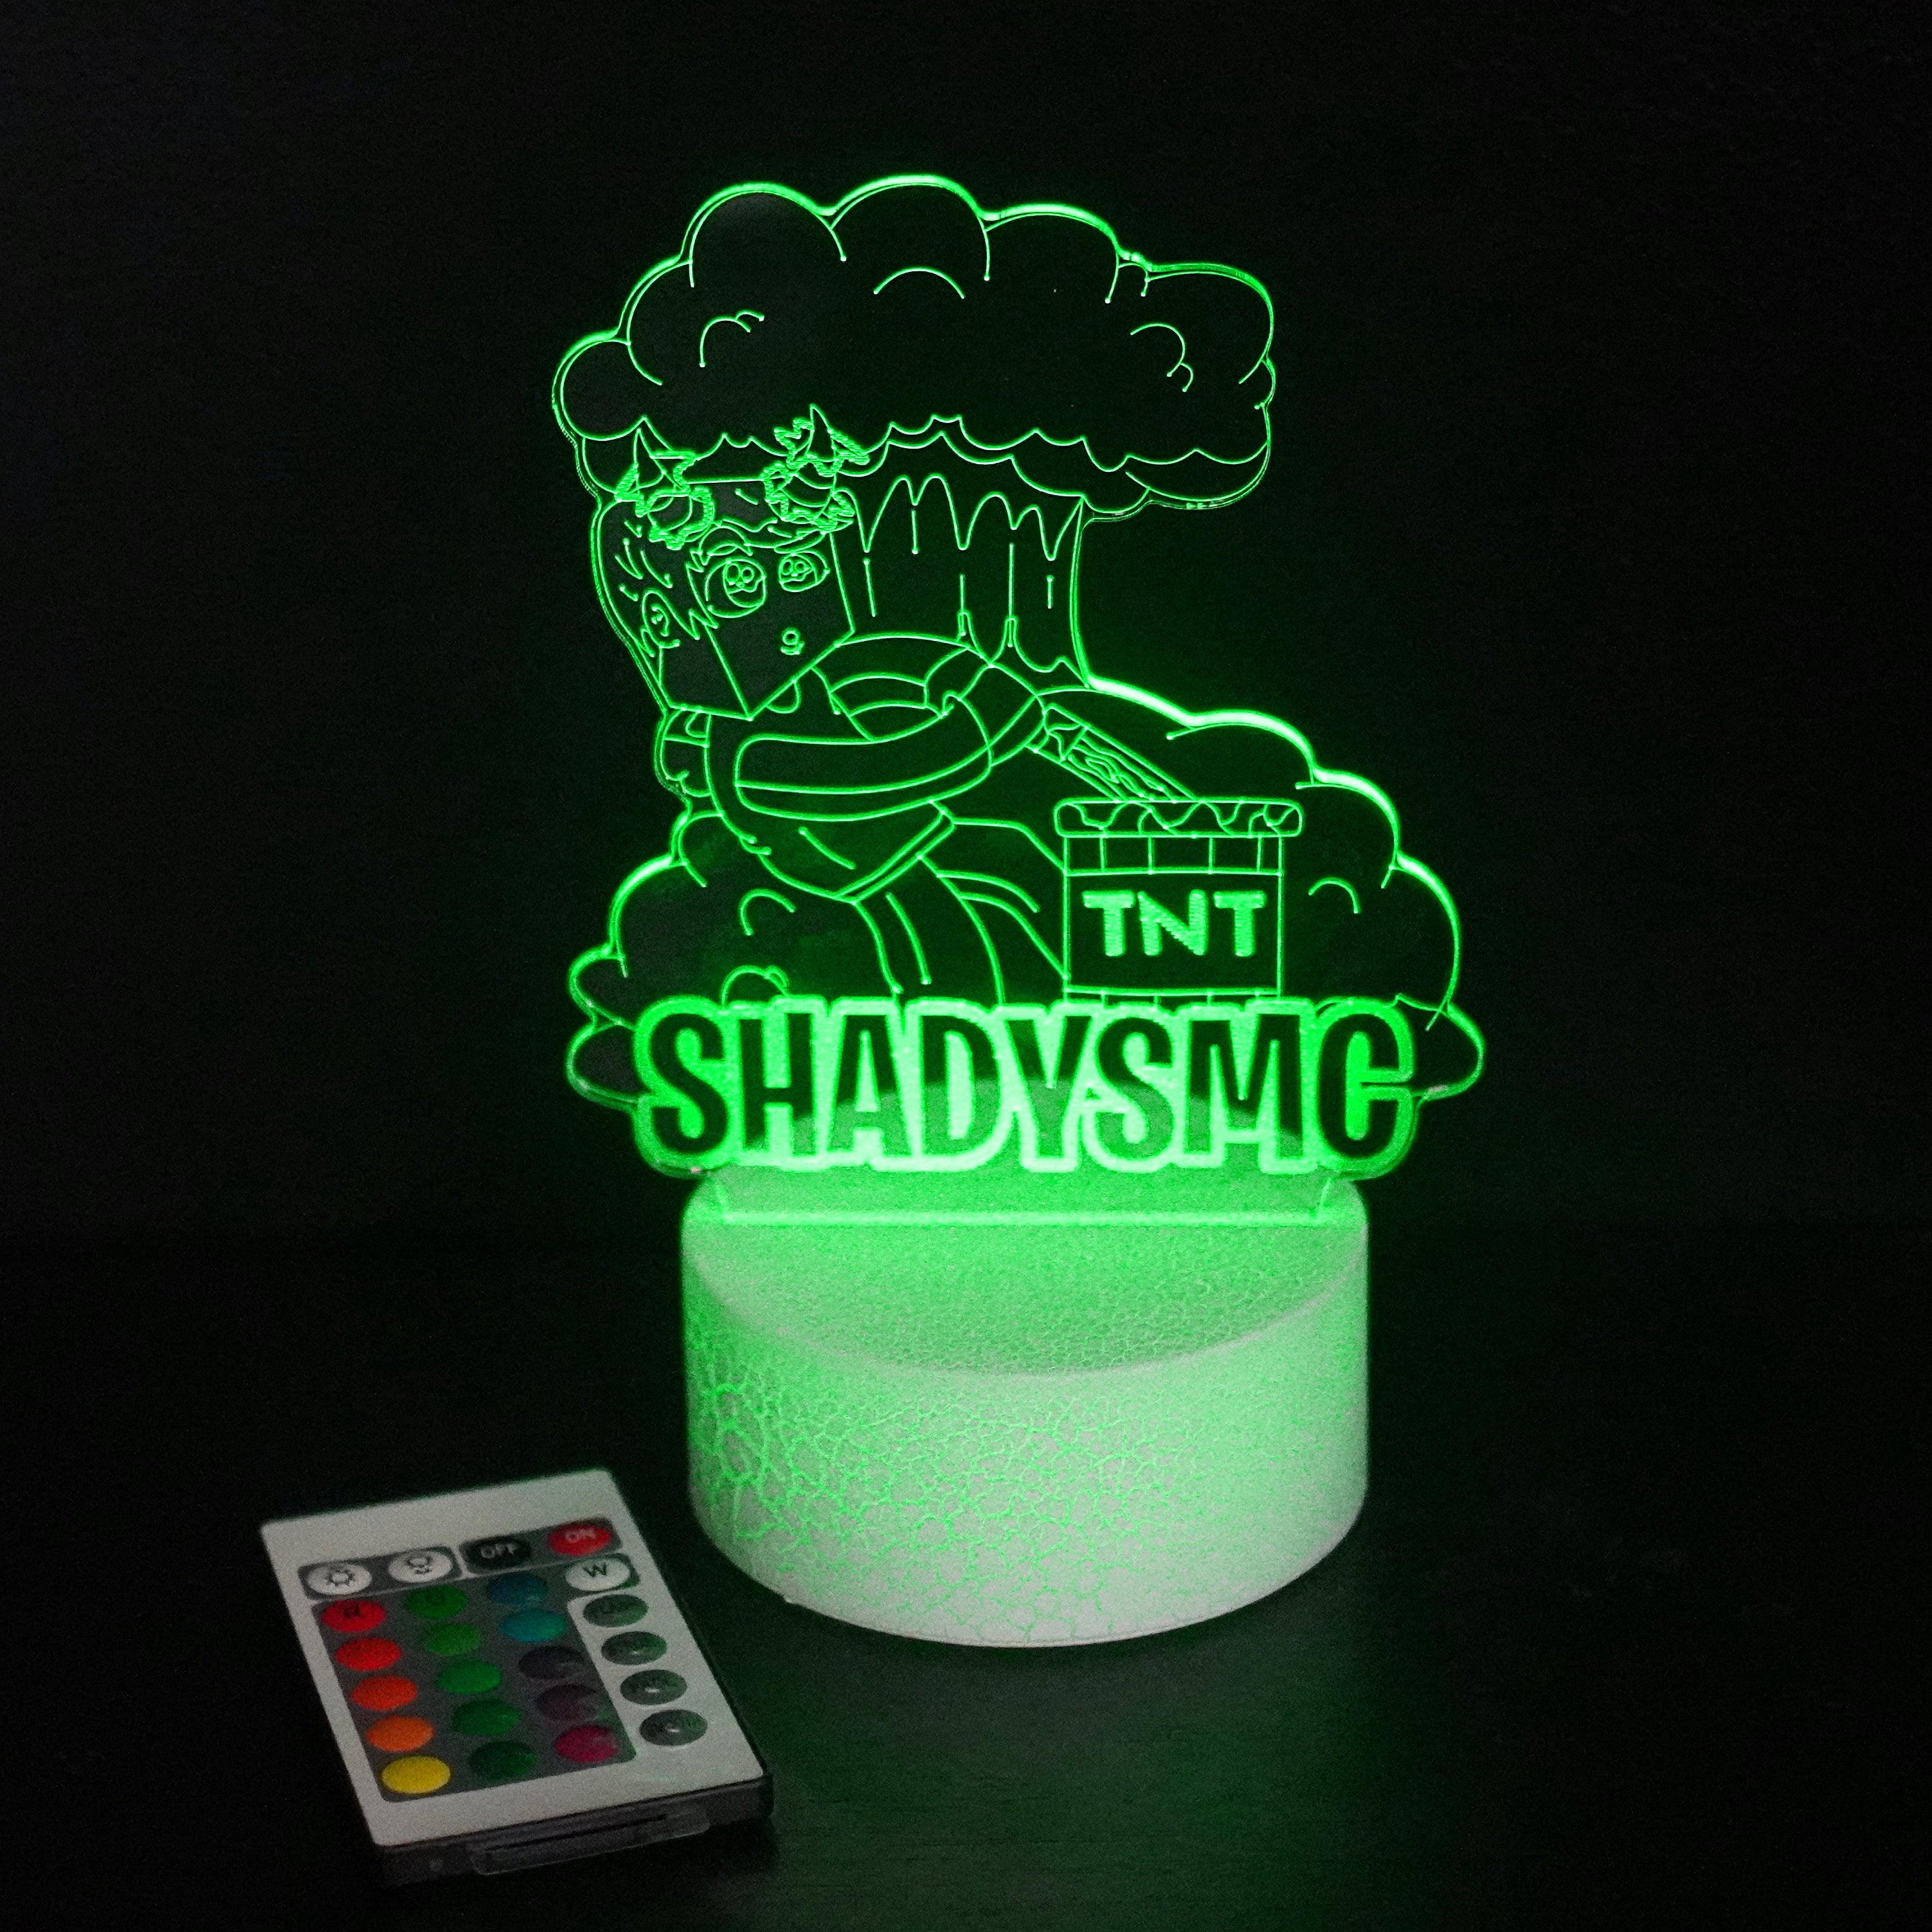 ShadysMC LED Lampe ShadysMC